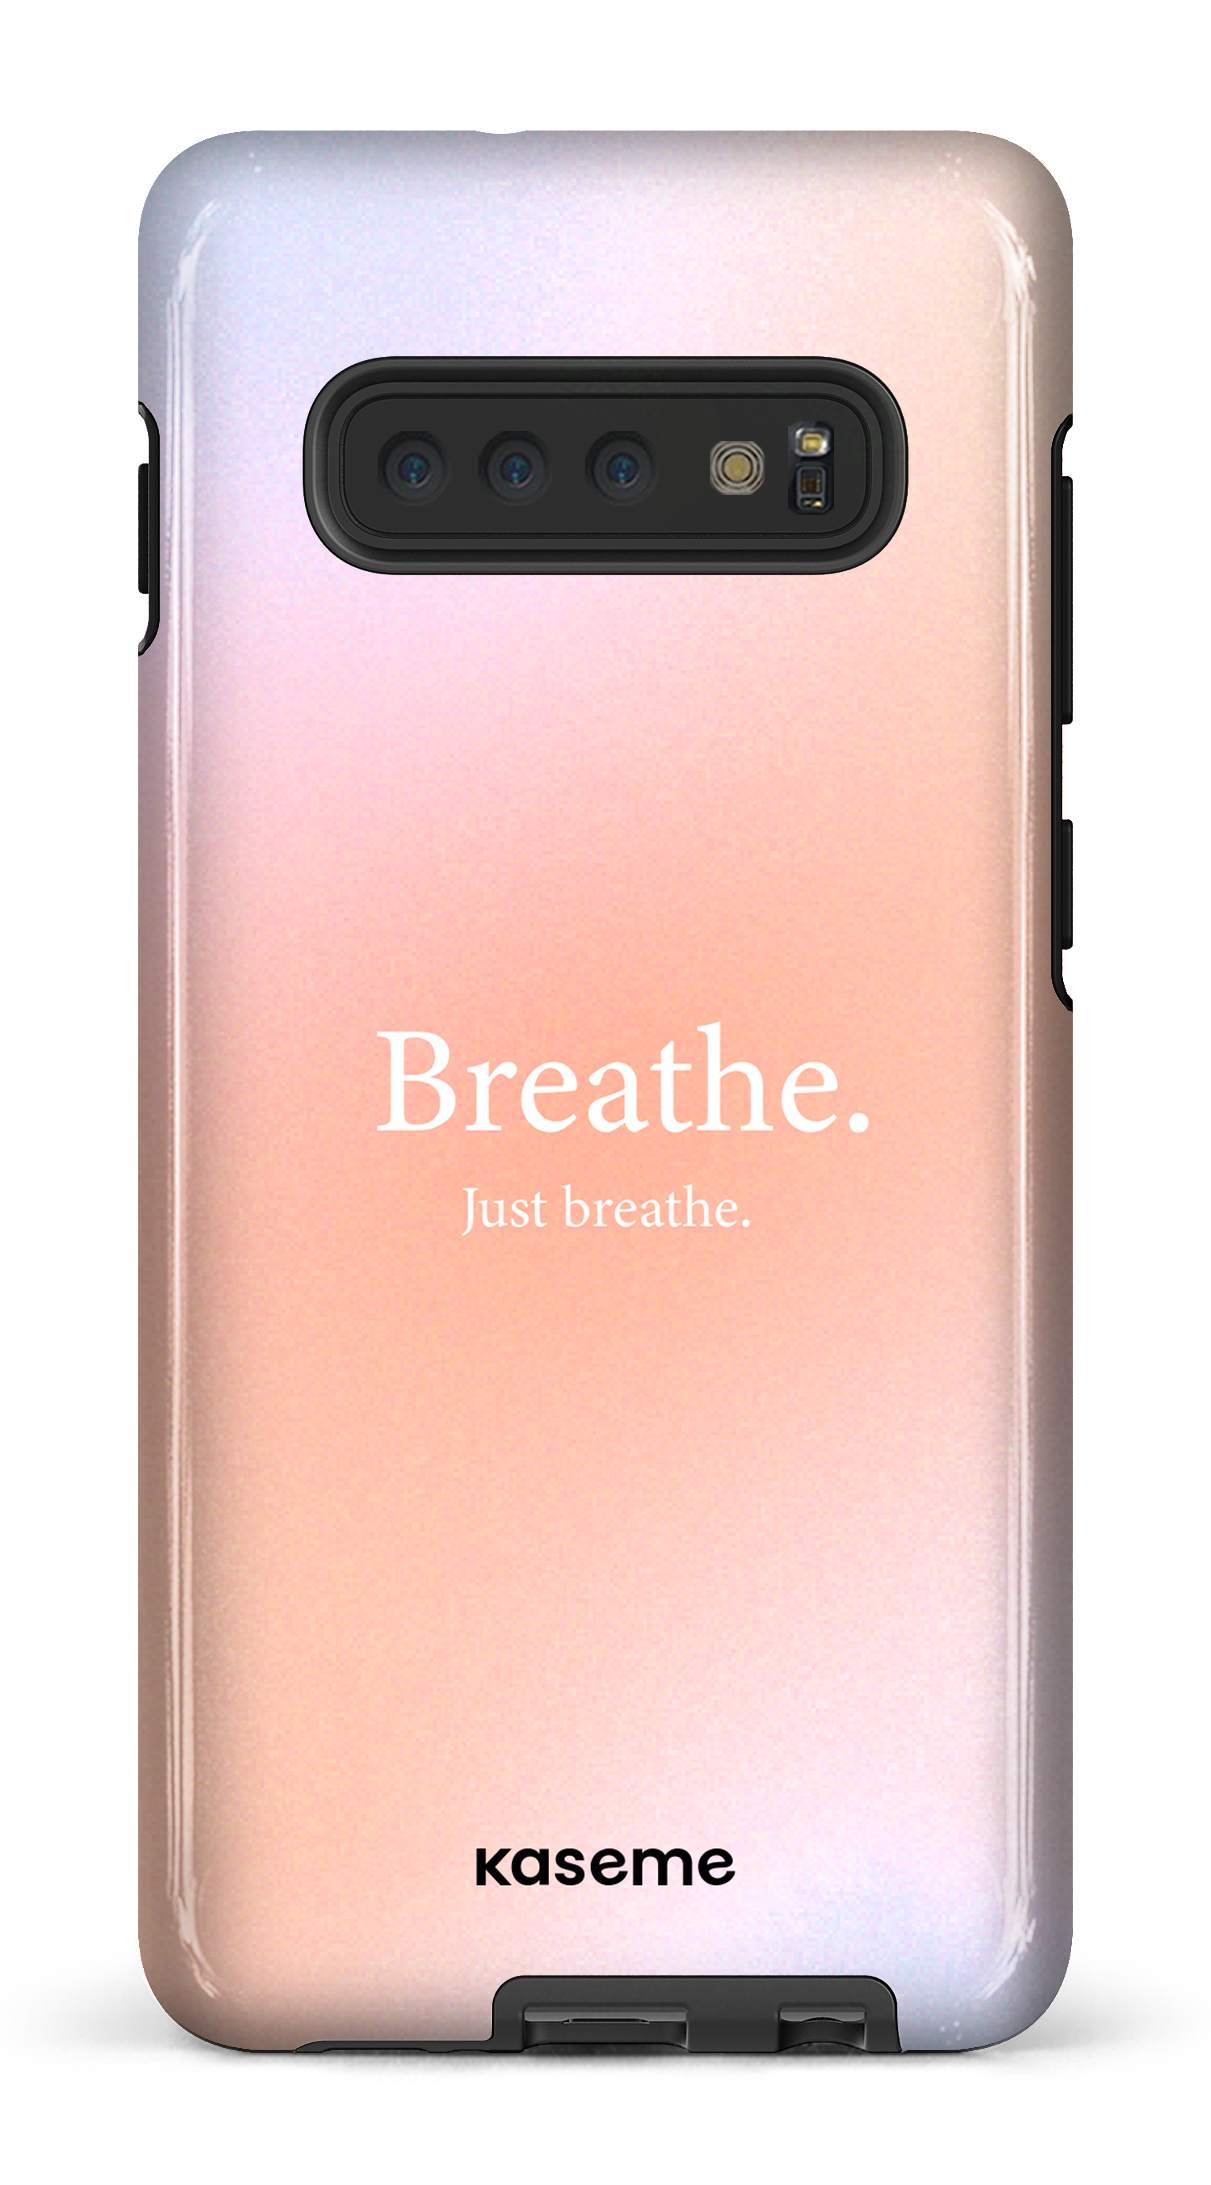 Just breathe - Galaxy S10 Plus